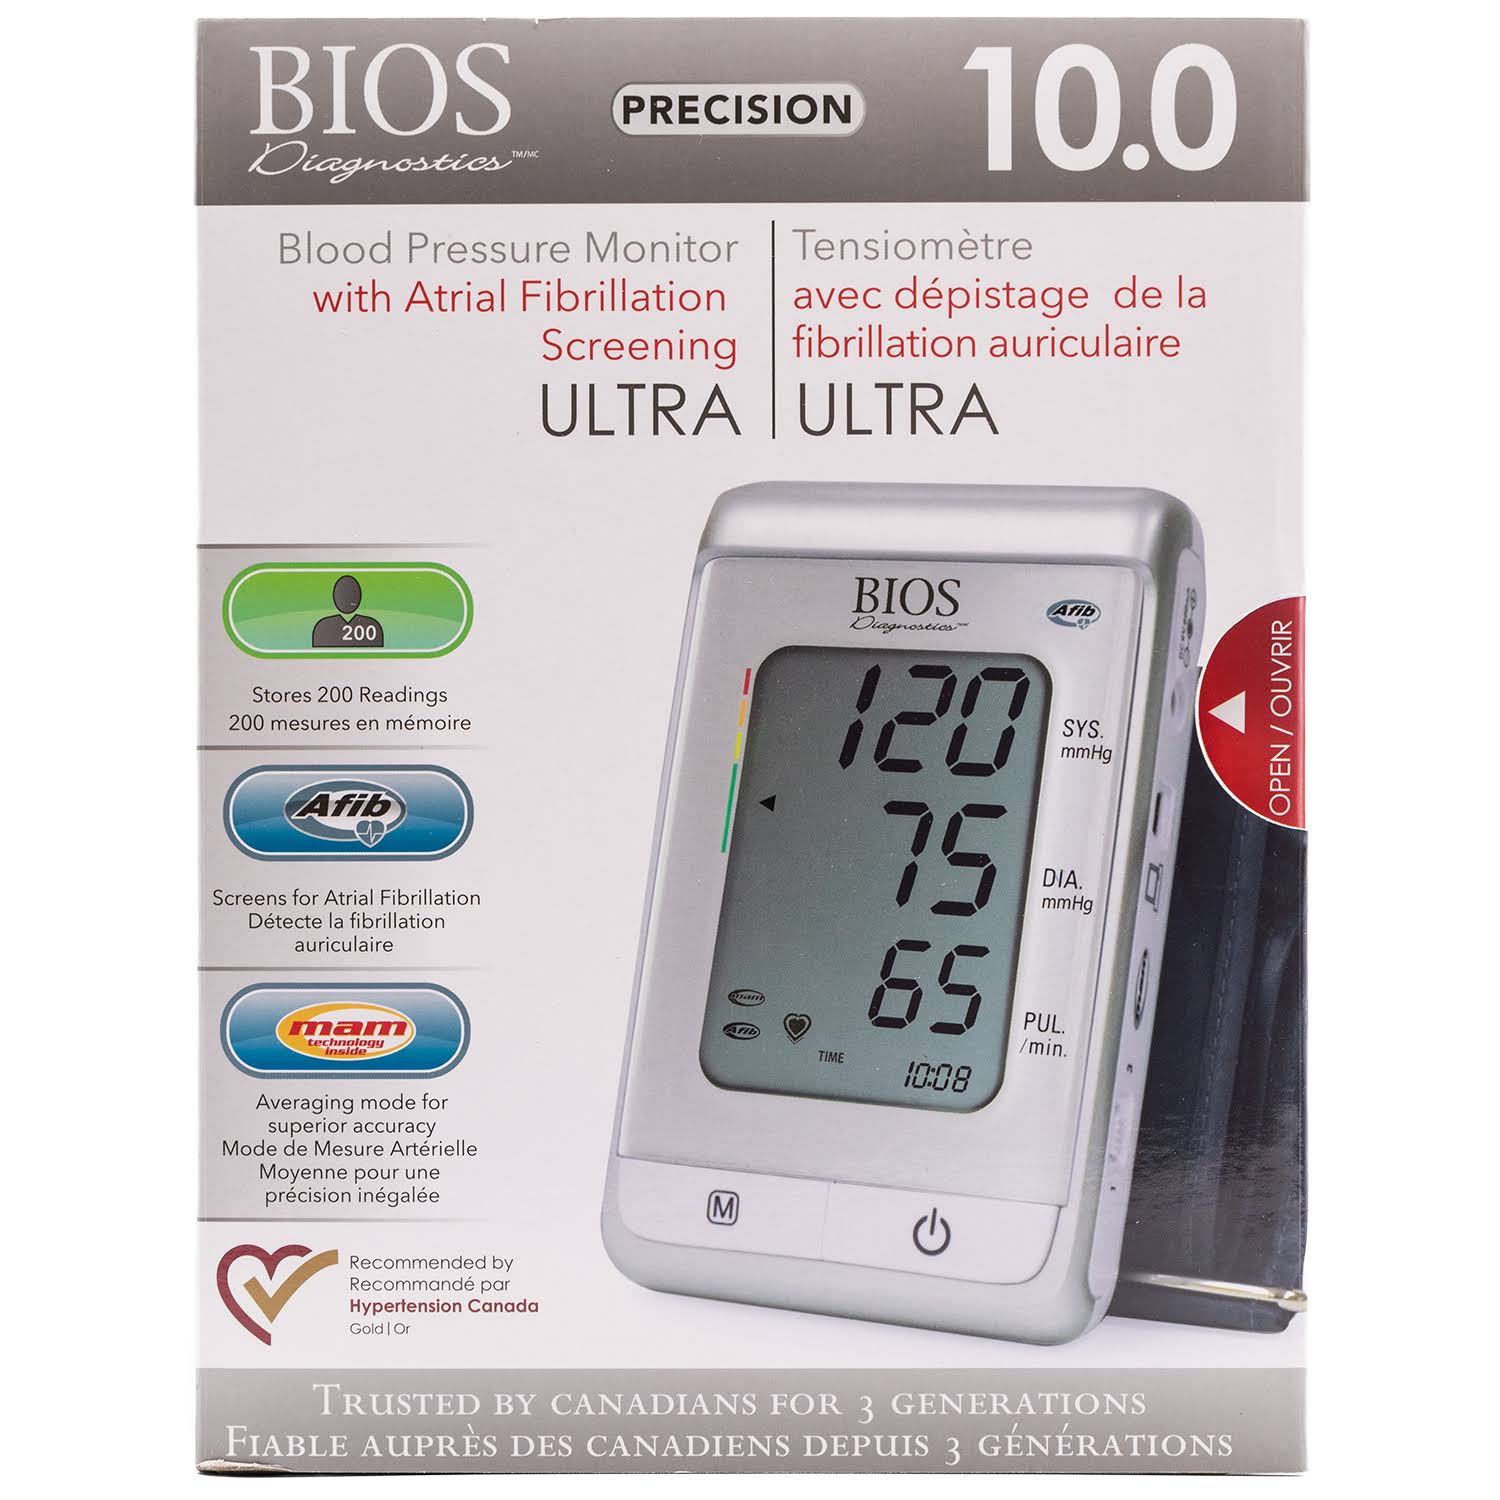 Bios Blood Pressure Monitor with Atrial Fibrillation Screening